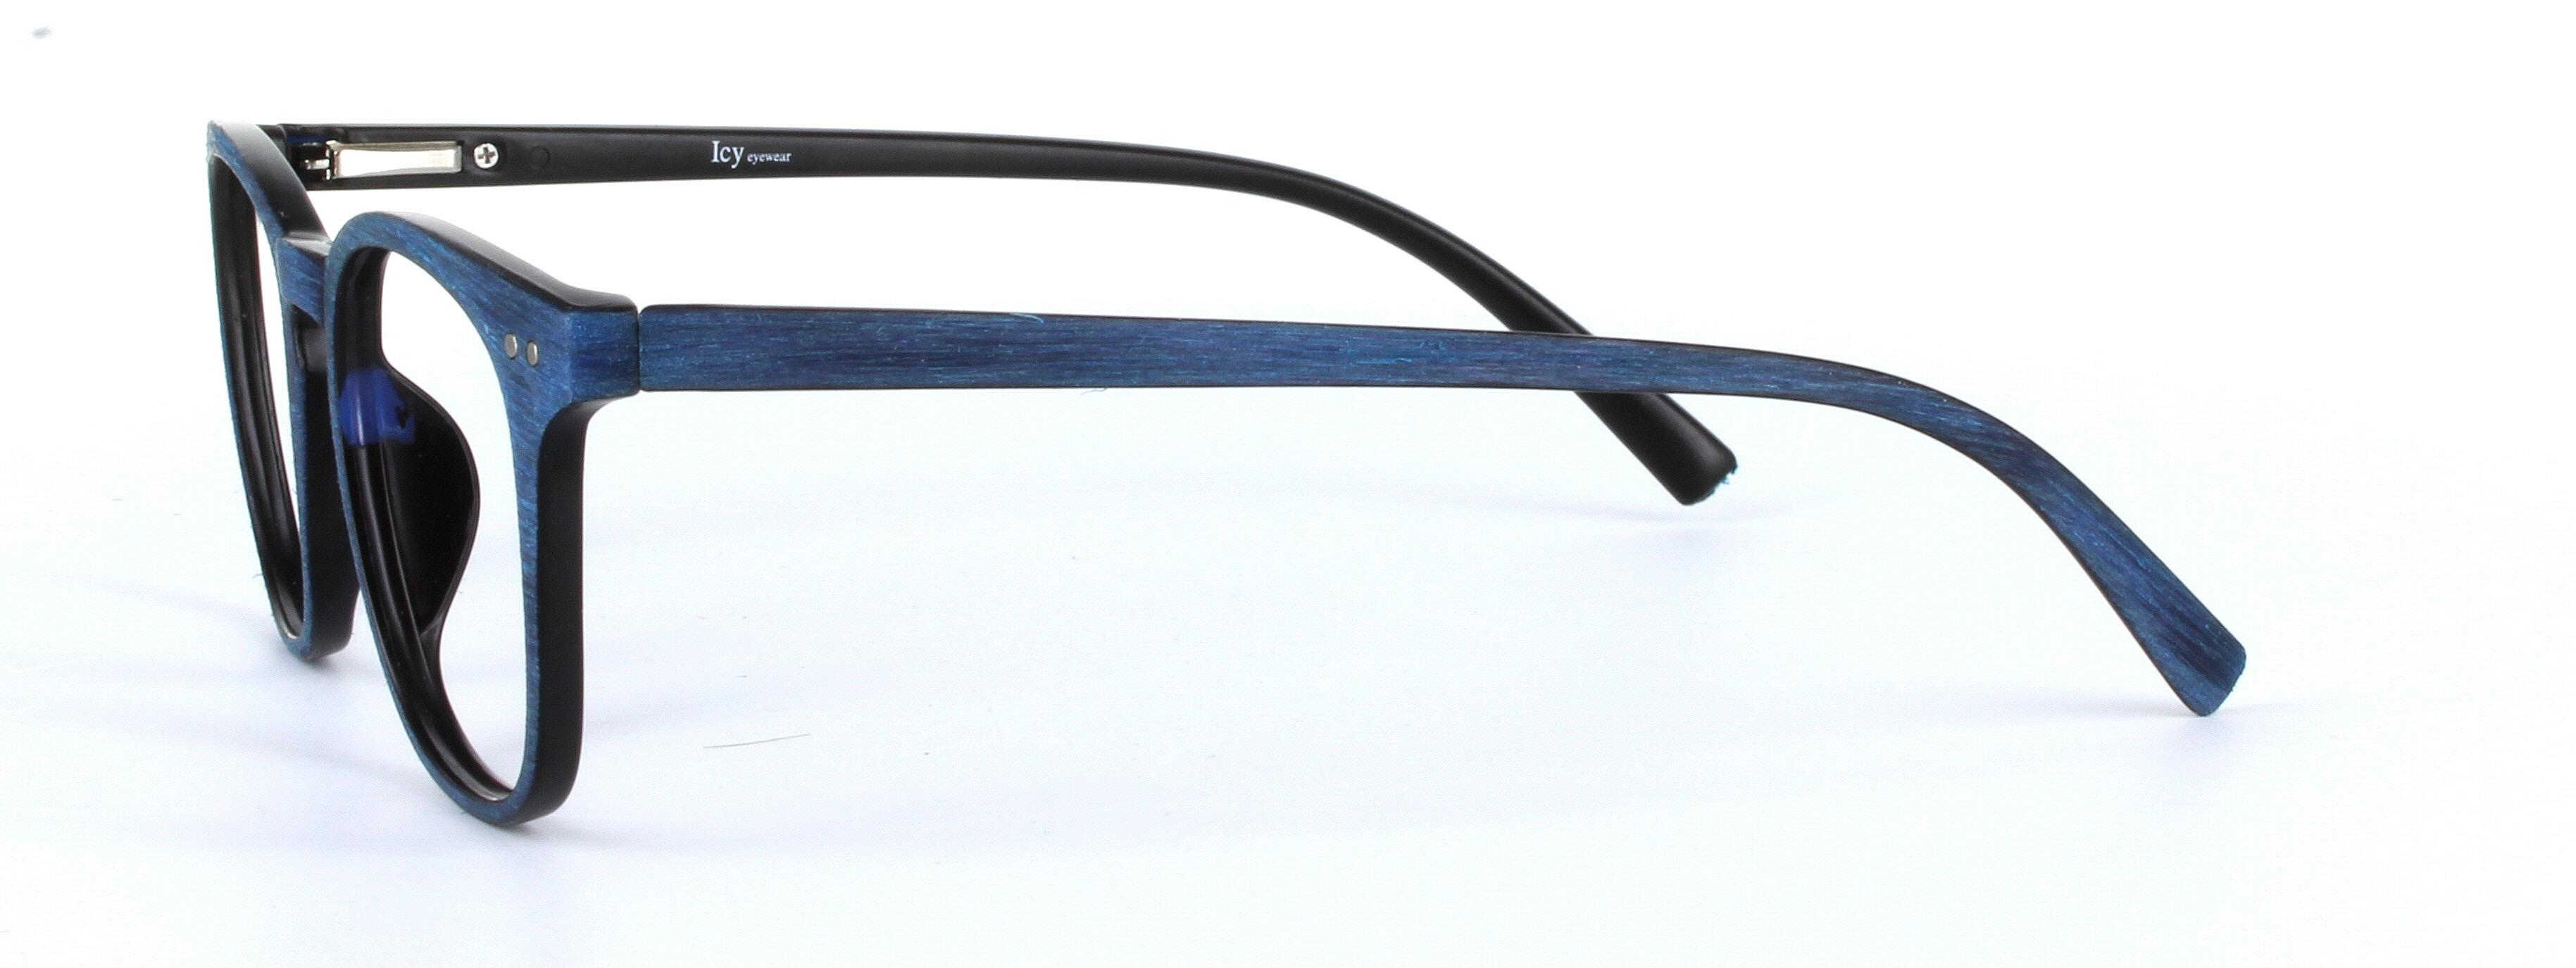 Aubrey Blue Full Rim Oval Round Plastic Glasses - Image View 2